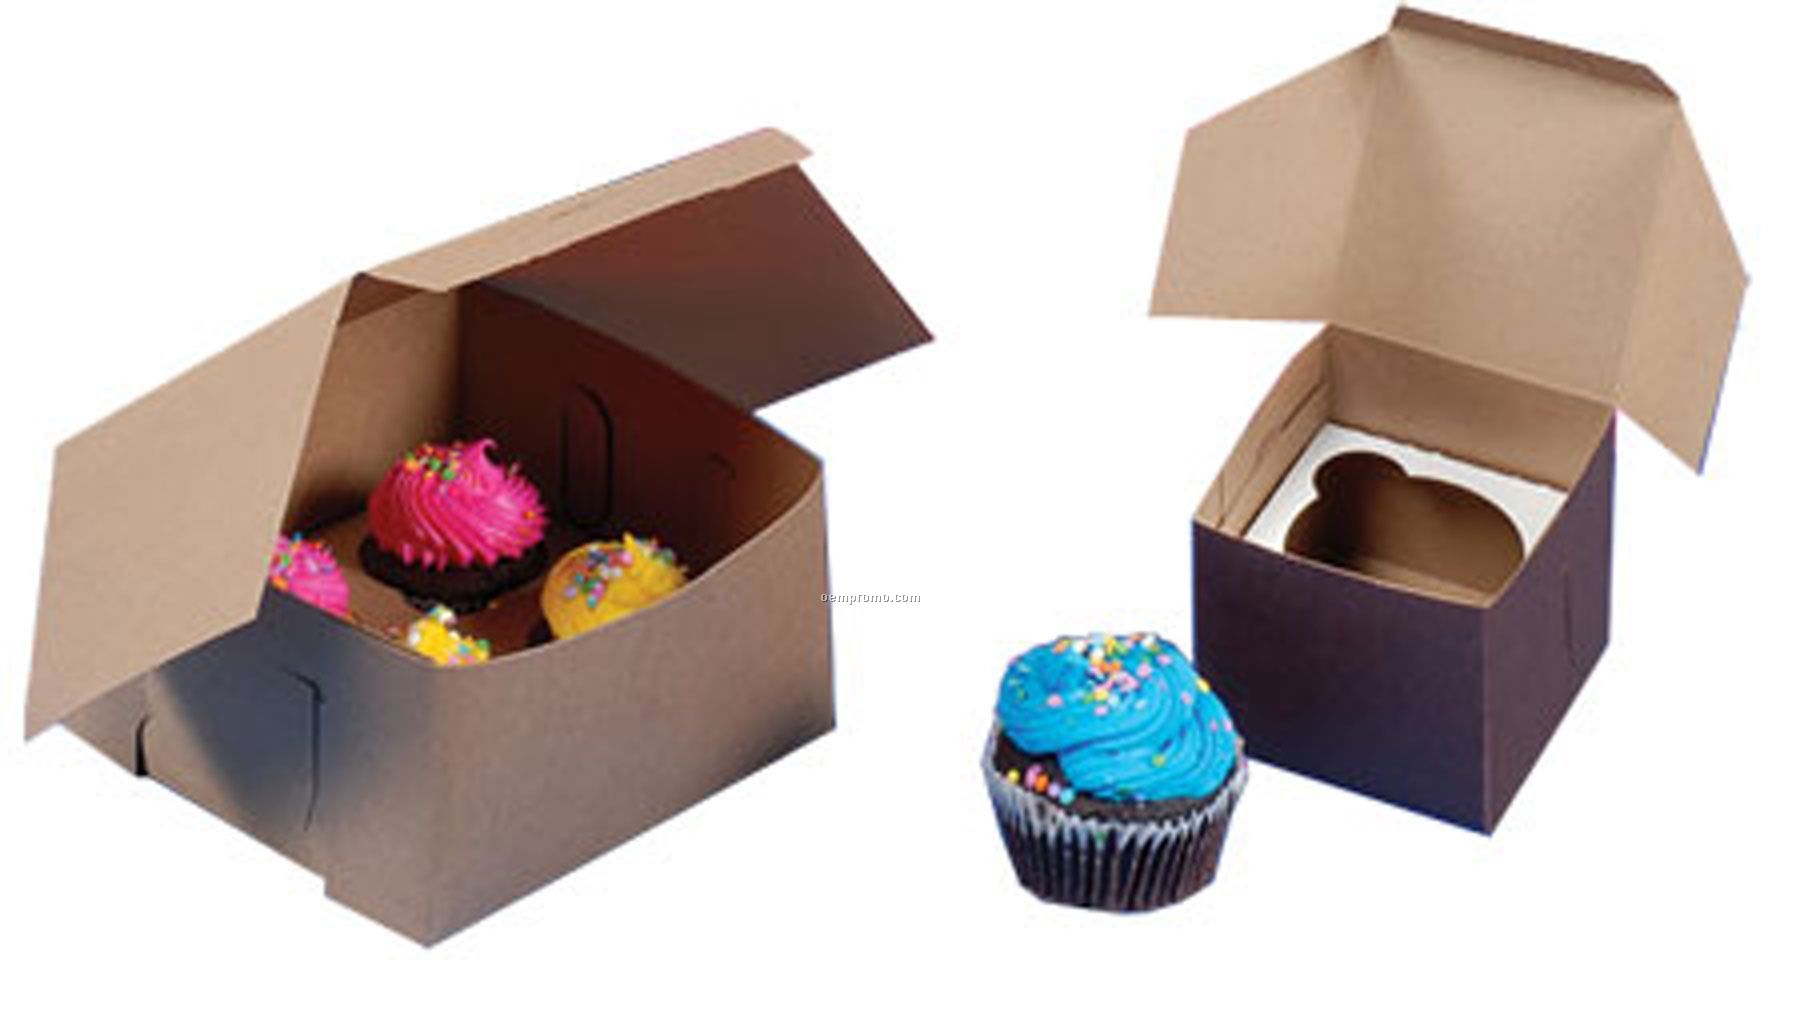 4 Mini/Reg Cupcake Boxes (7